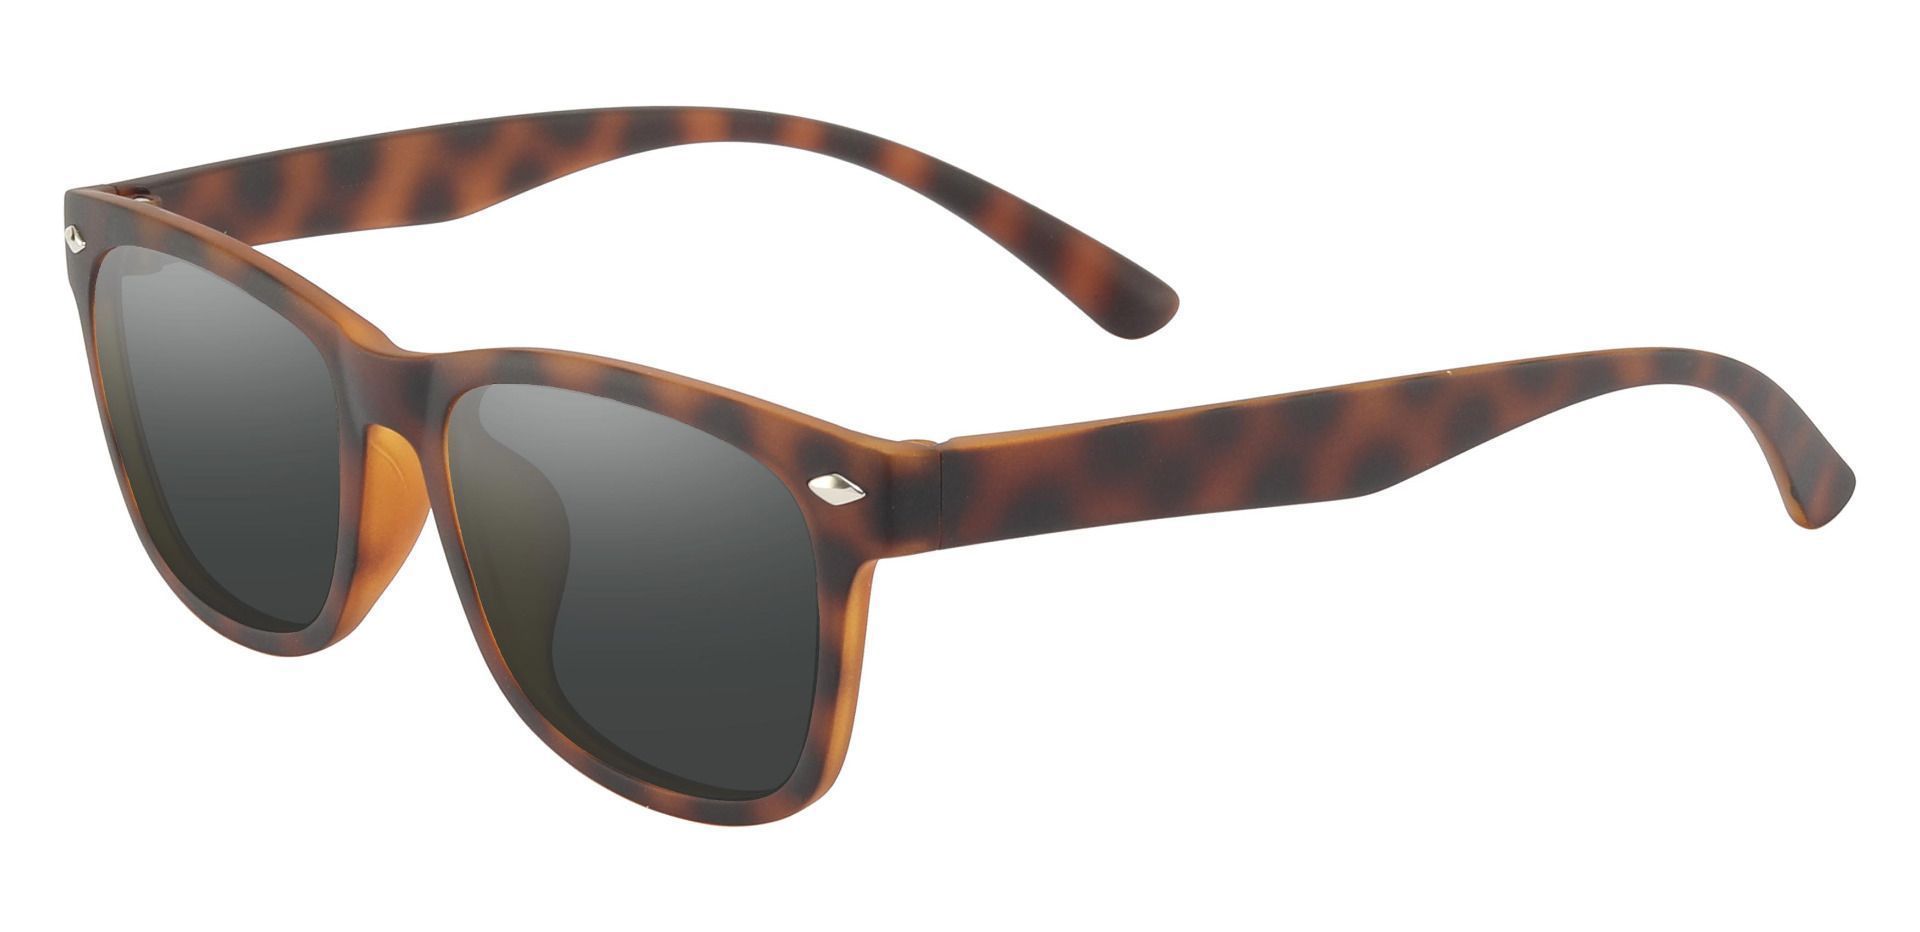 Shaler Square Lined Bifocal Sunglasses - Tortoise Frame With Gray Lenses